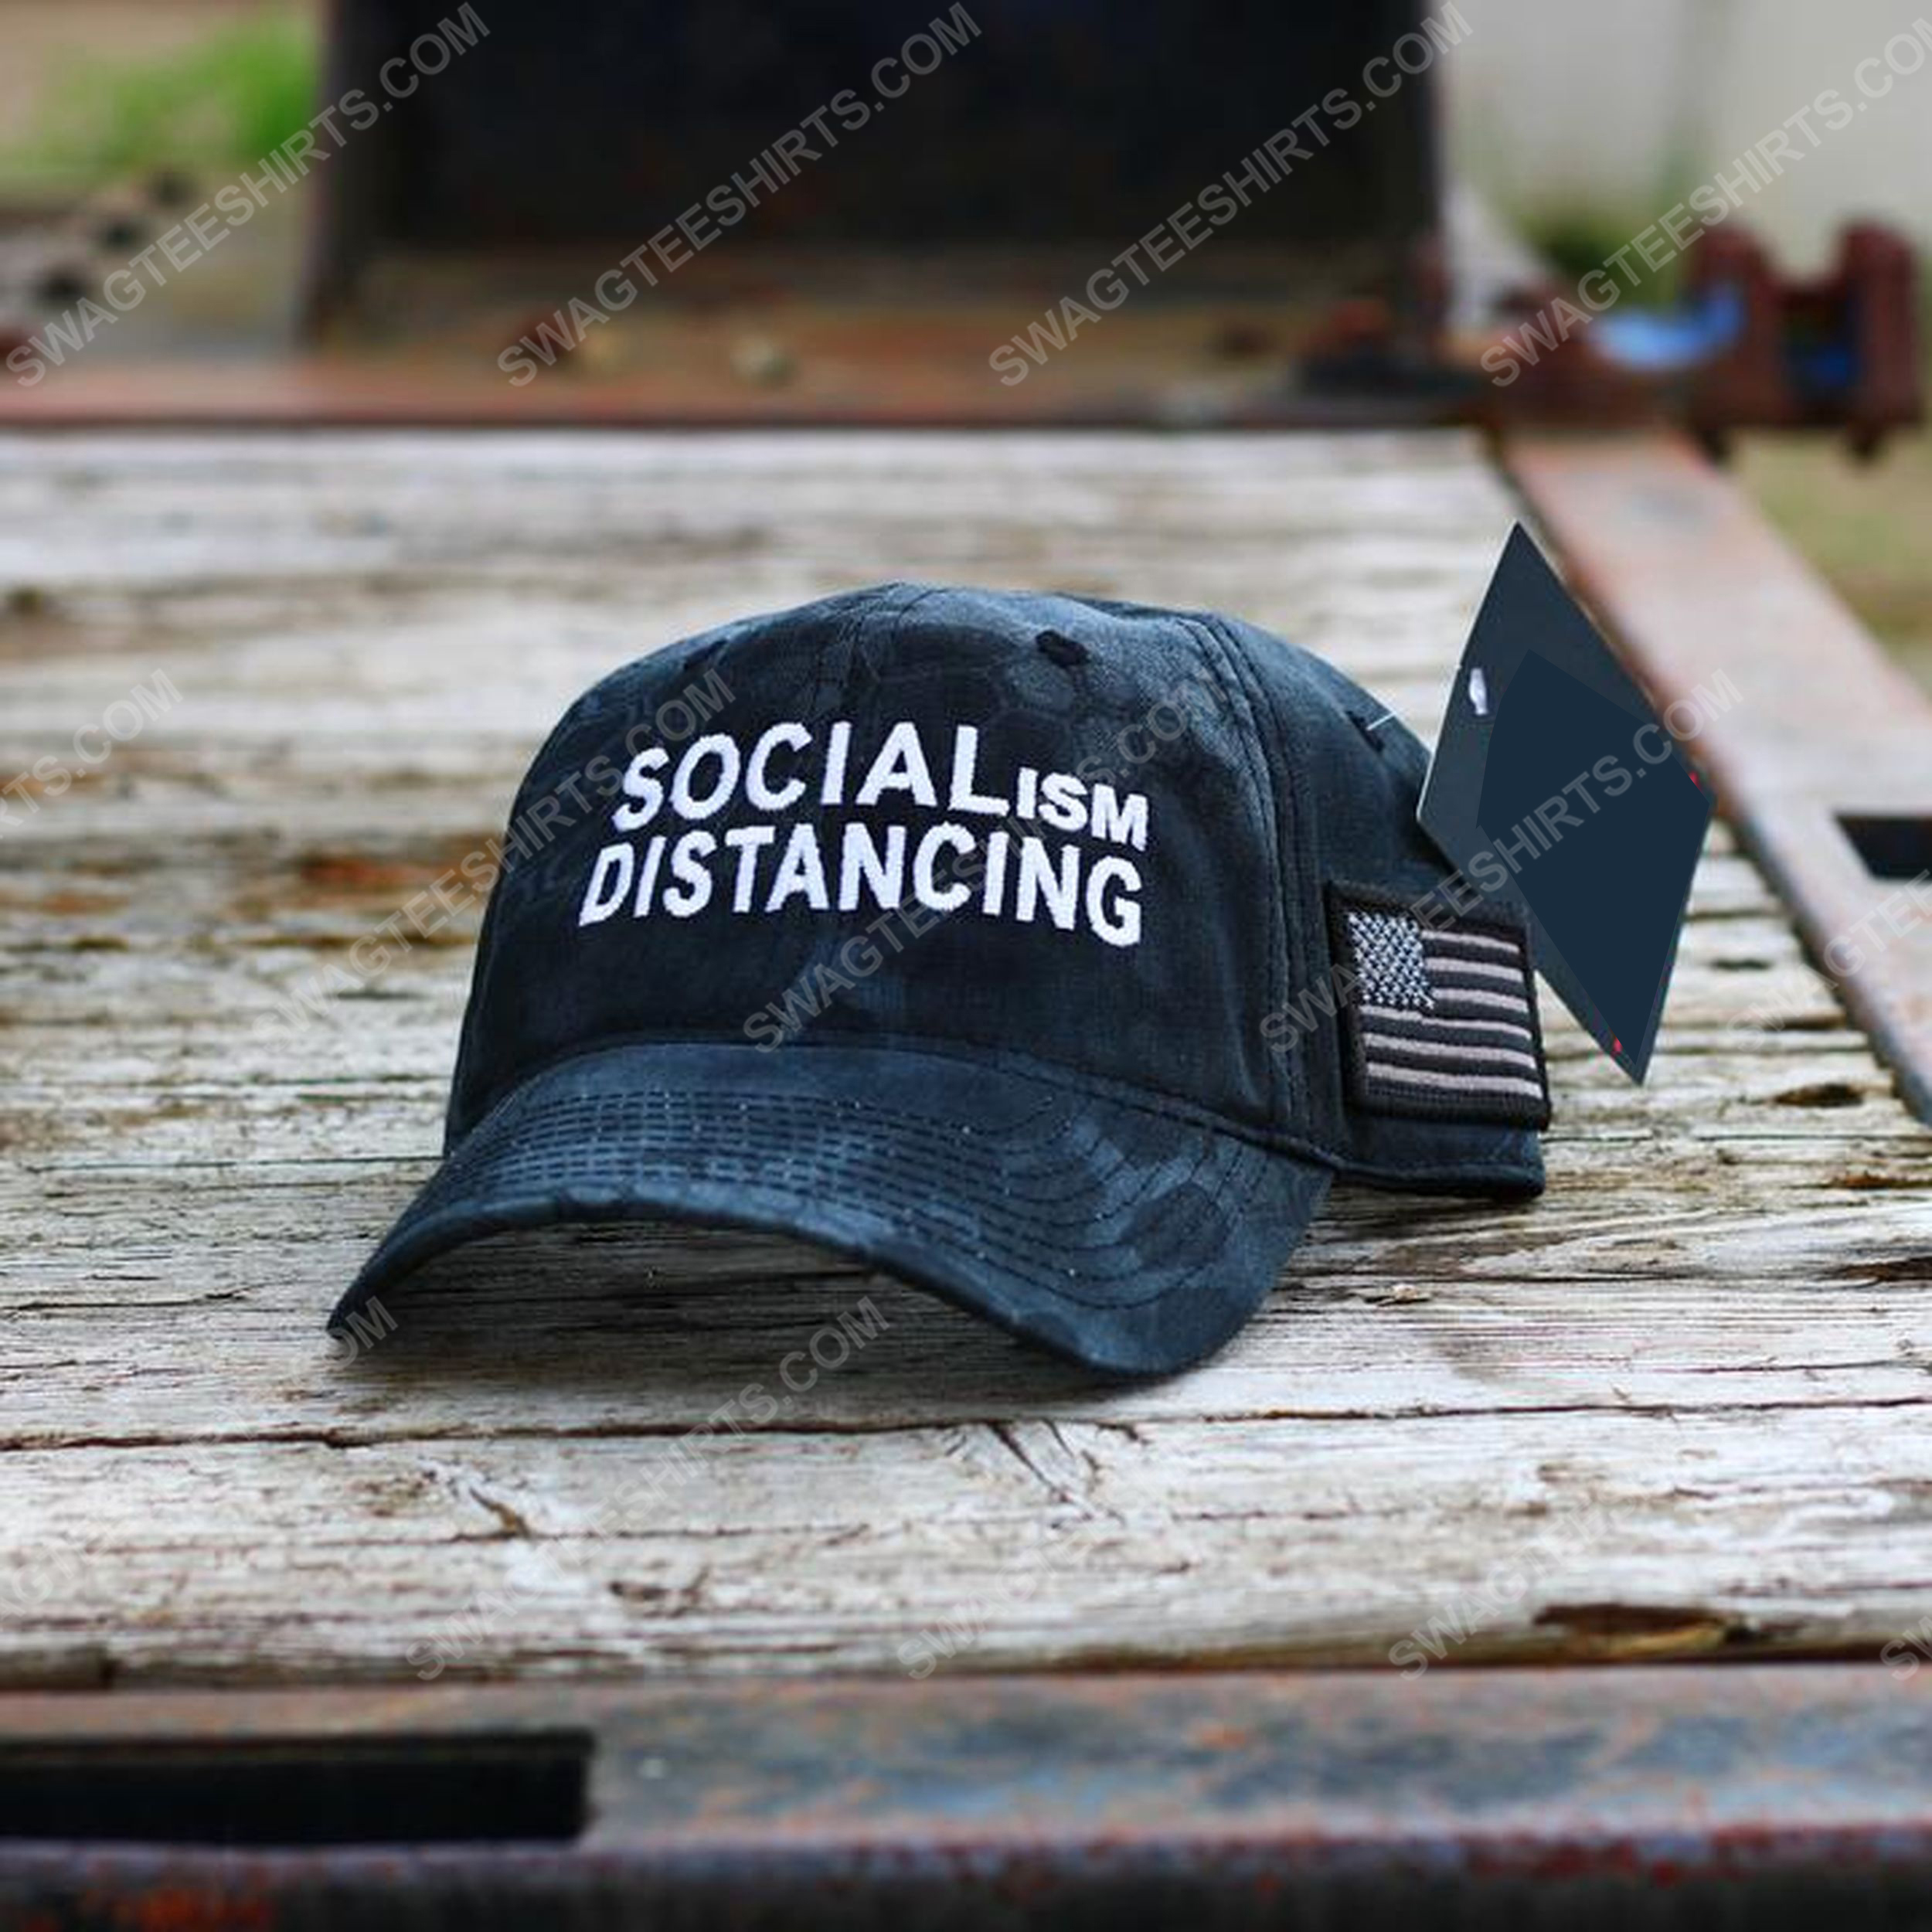 Socialism distancing full print classic hat 1